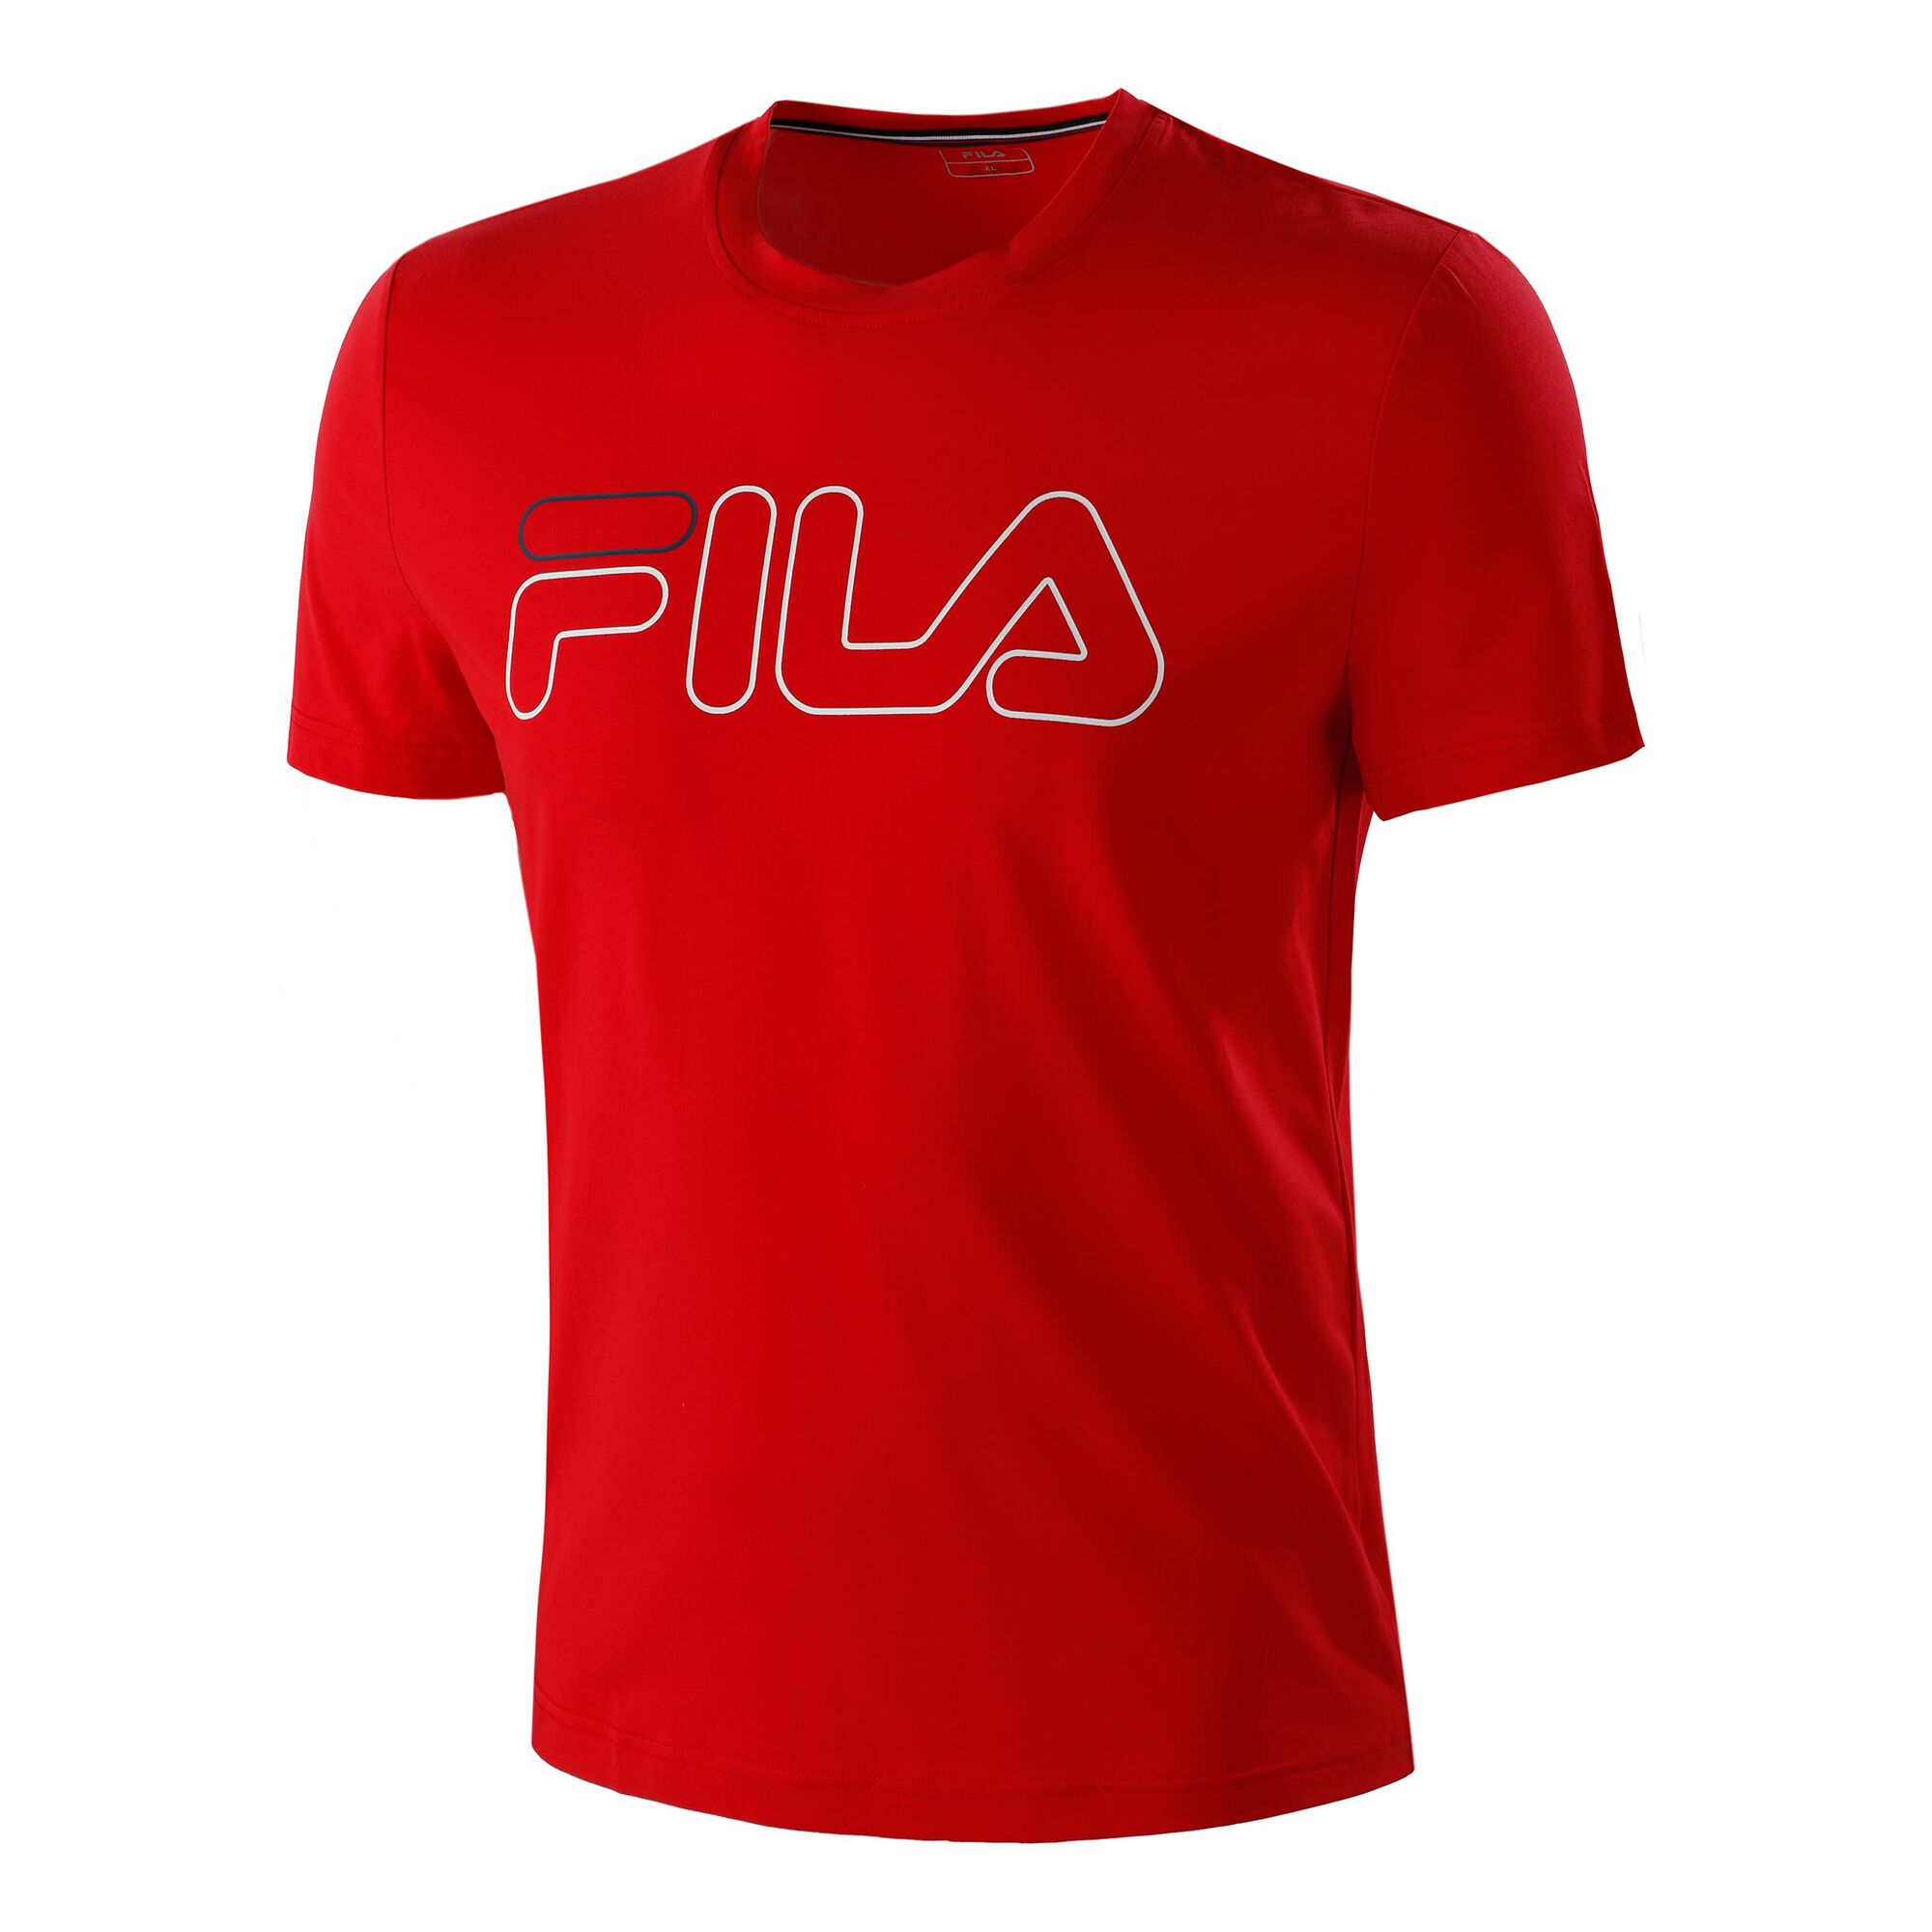 Fila Ricki T-shirt Herrer Rød køb | Tennis-Point